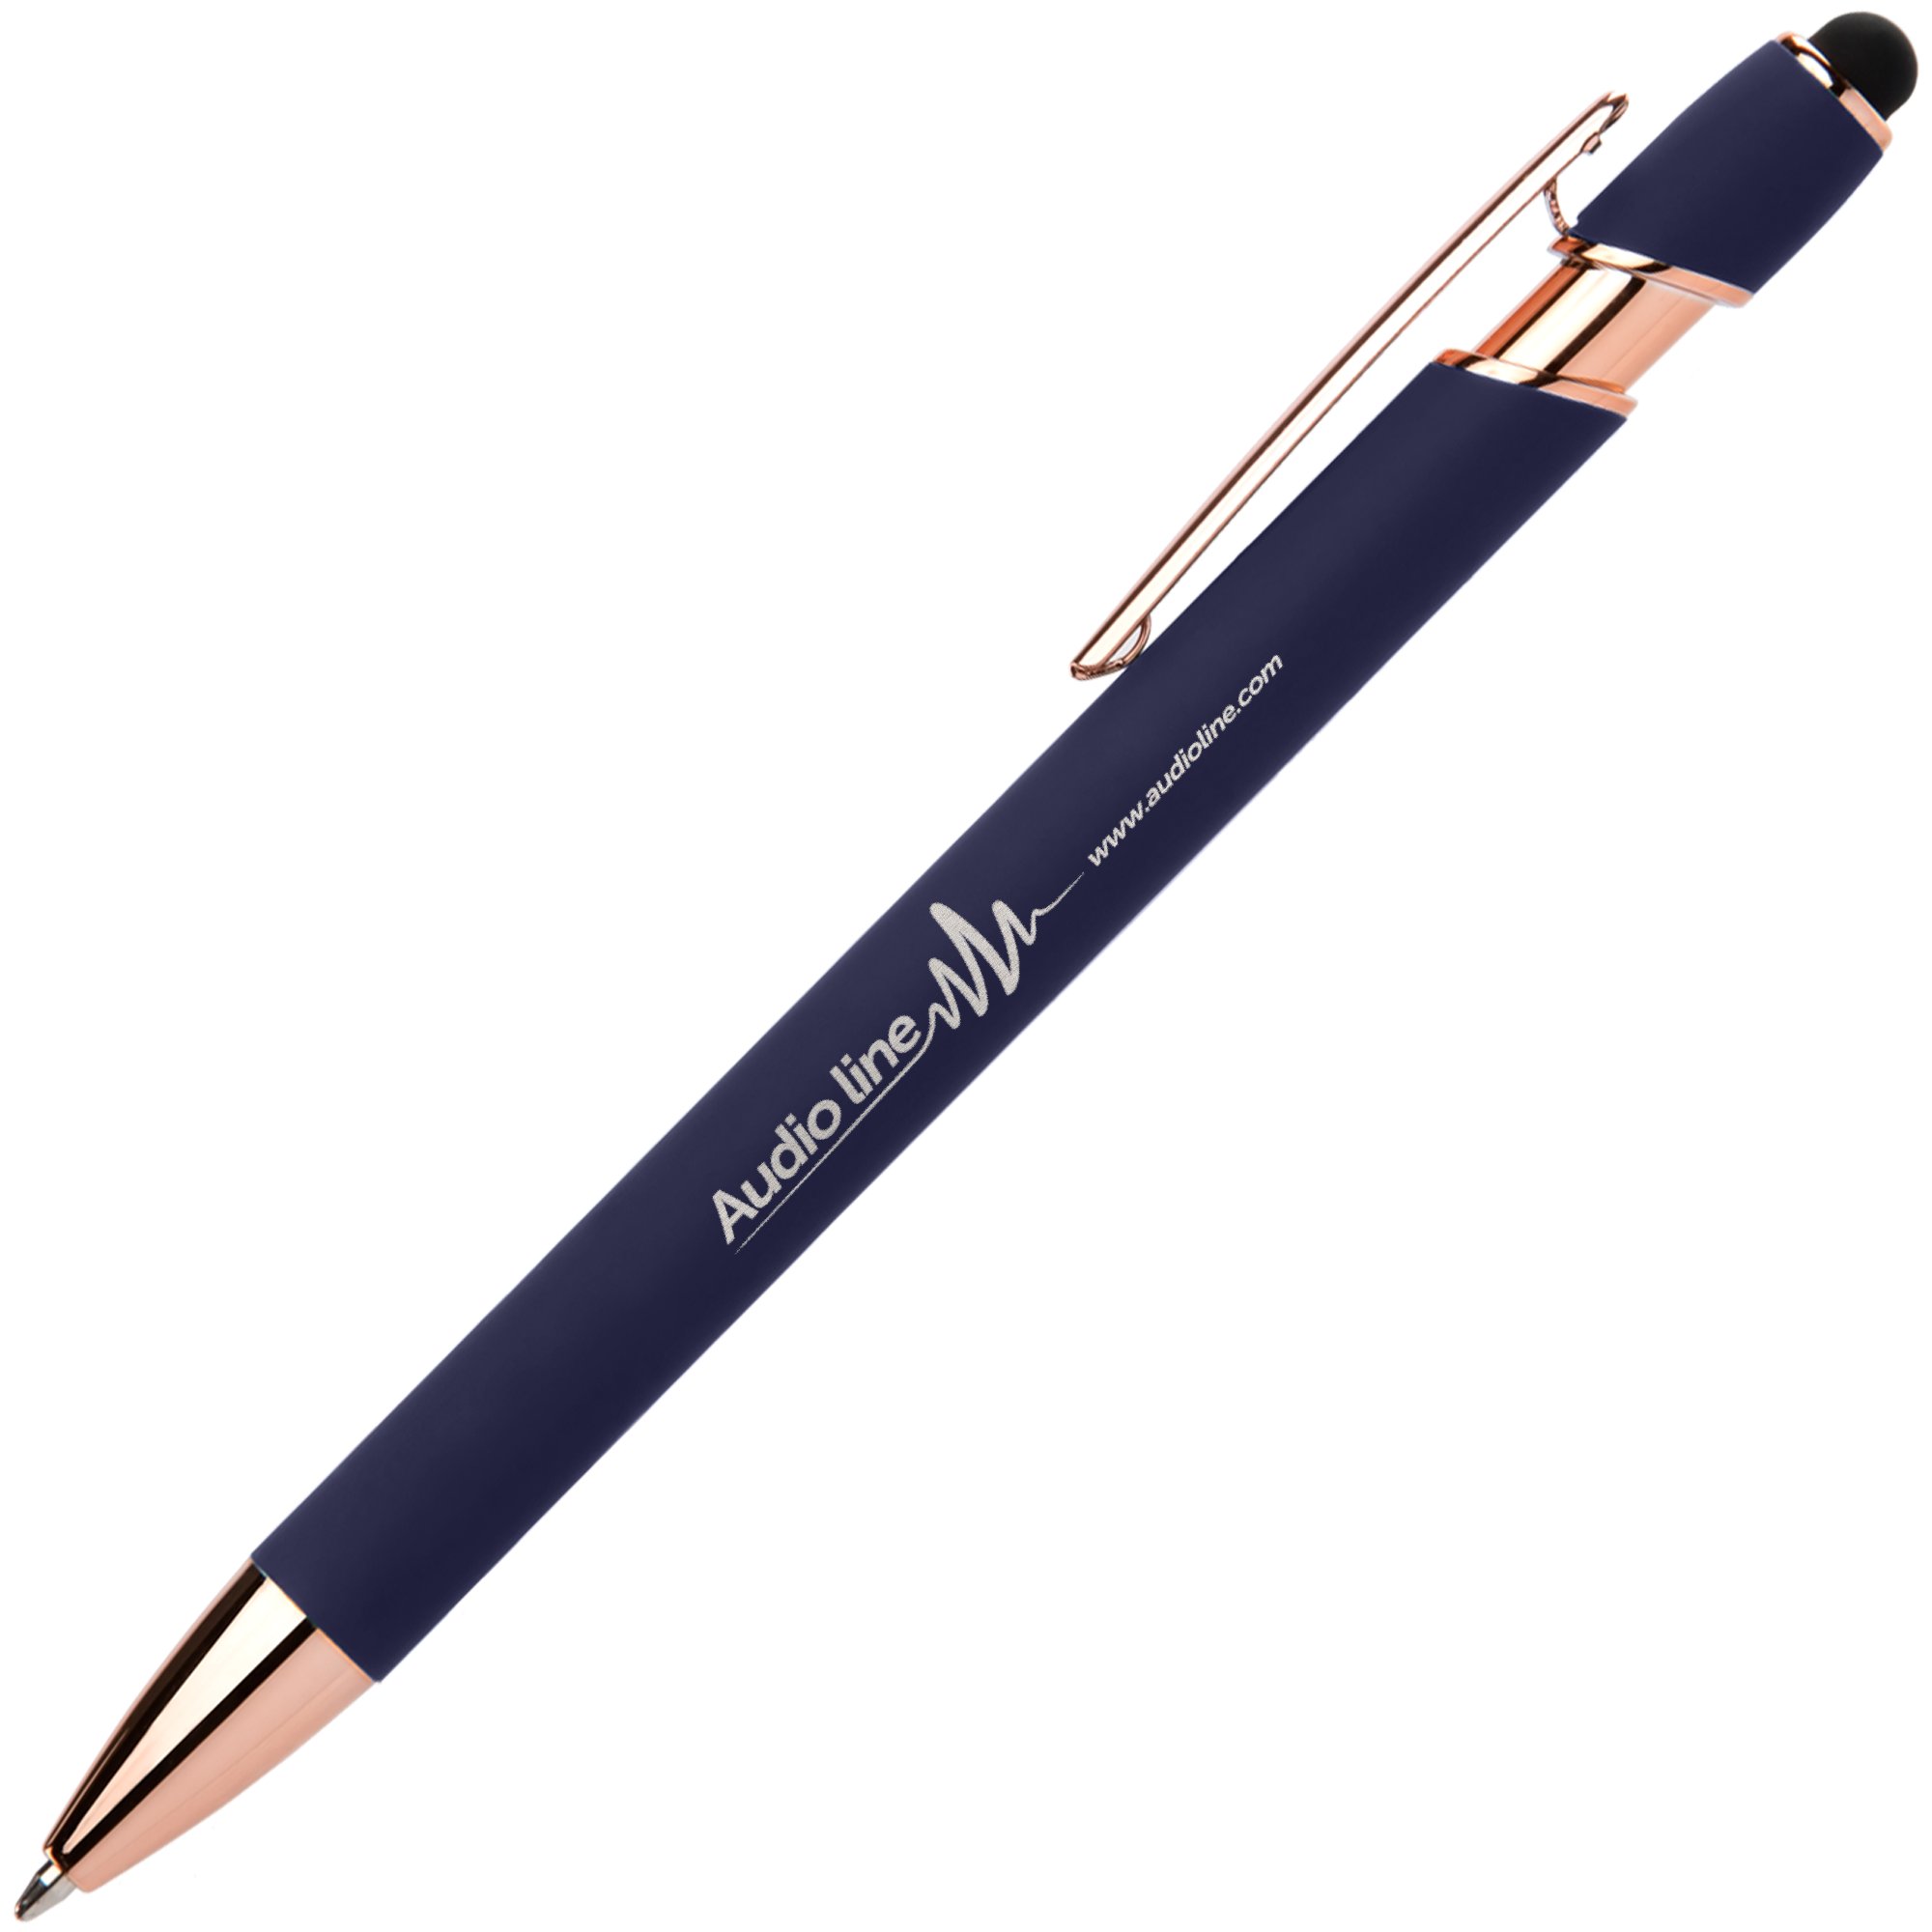 Rose Gold promotional pen